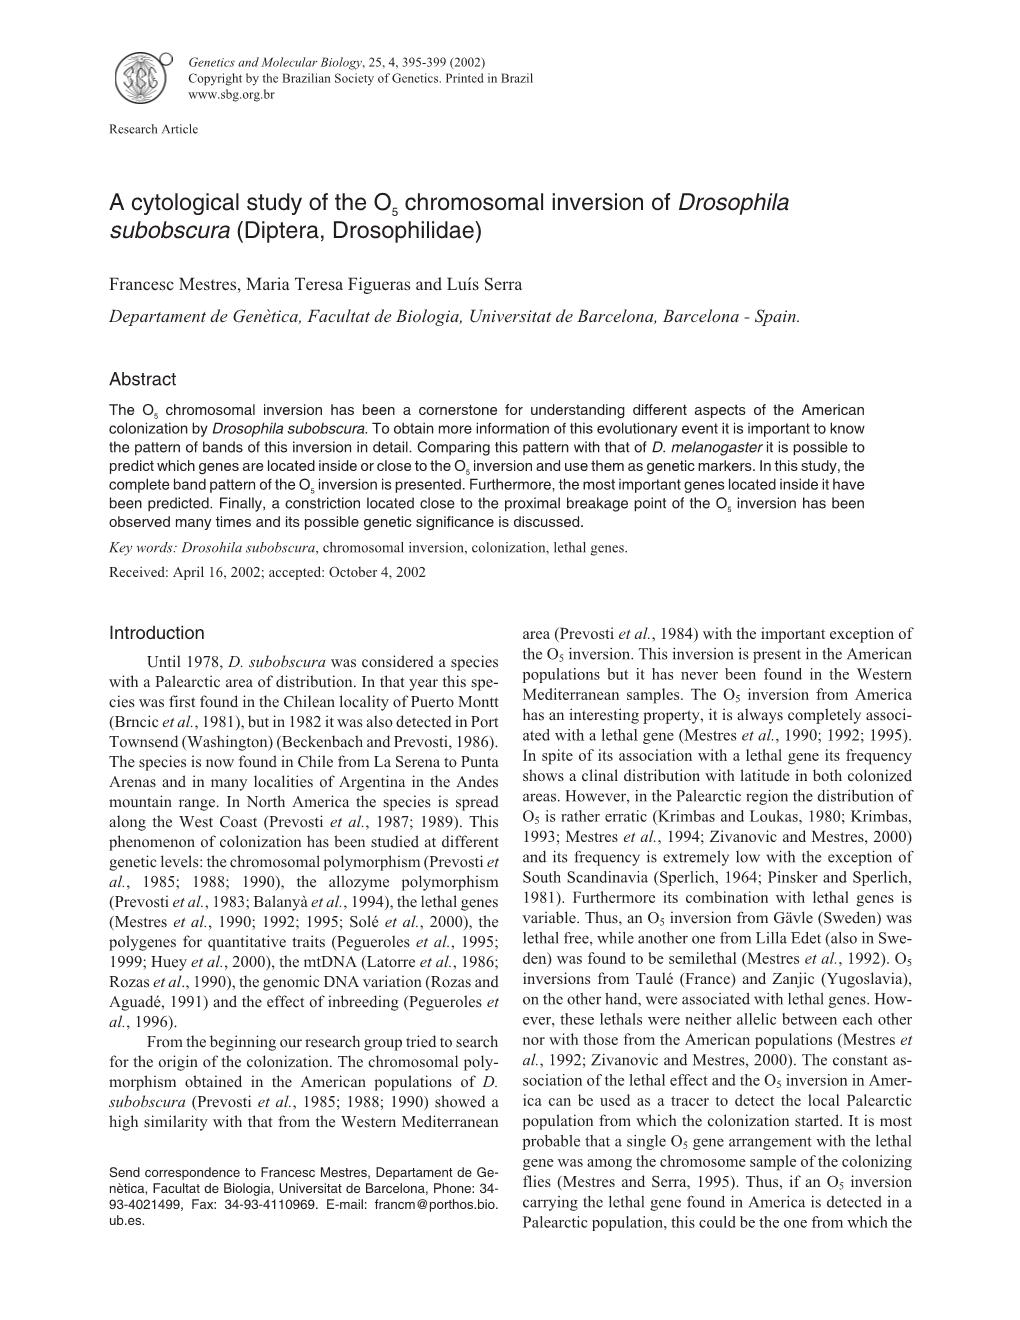 A Cytological Study of the O5 Chromosomal Inversion of Drosophila Subobscura (Diptera, Drosophilidae)